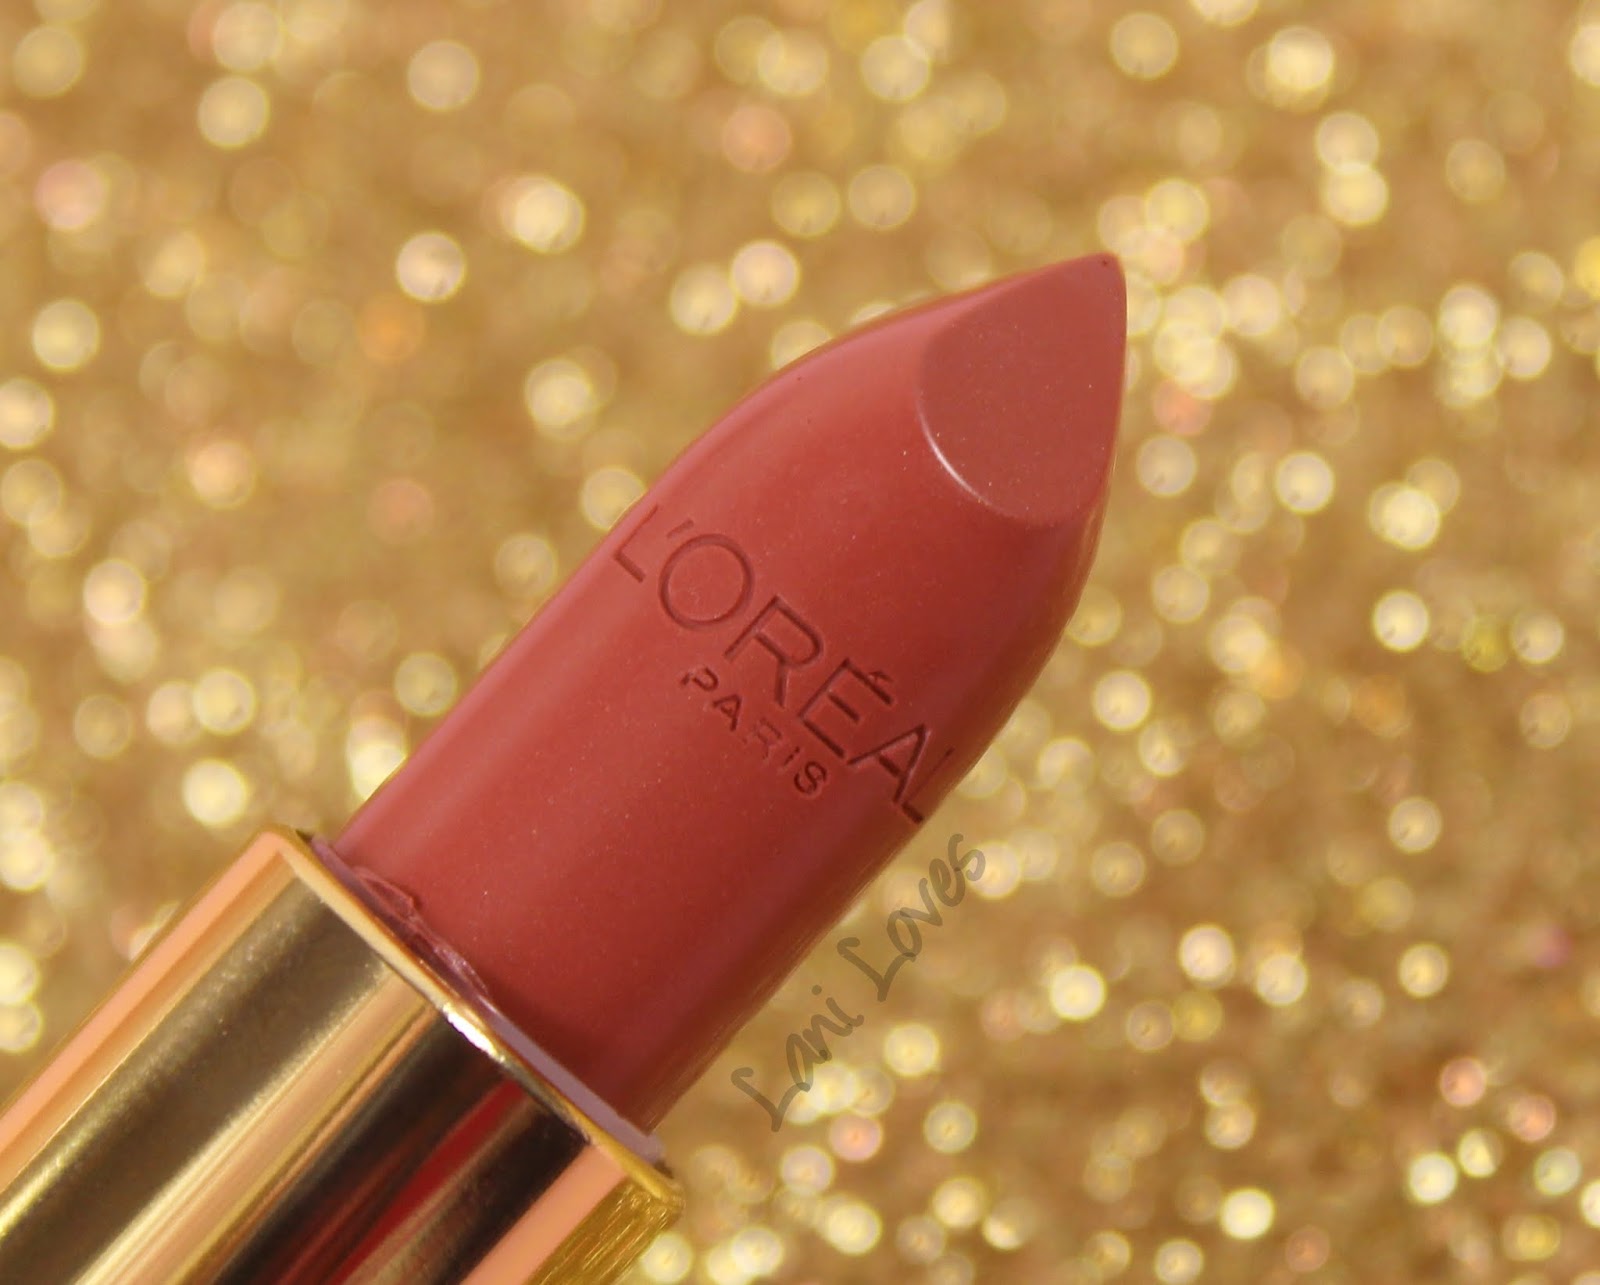 L'Oreal Color Riche Collection Exclusive Lipsticks Swatches & Revi...